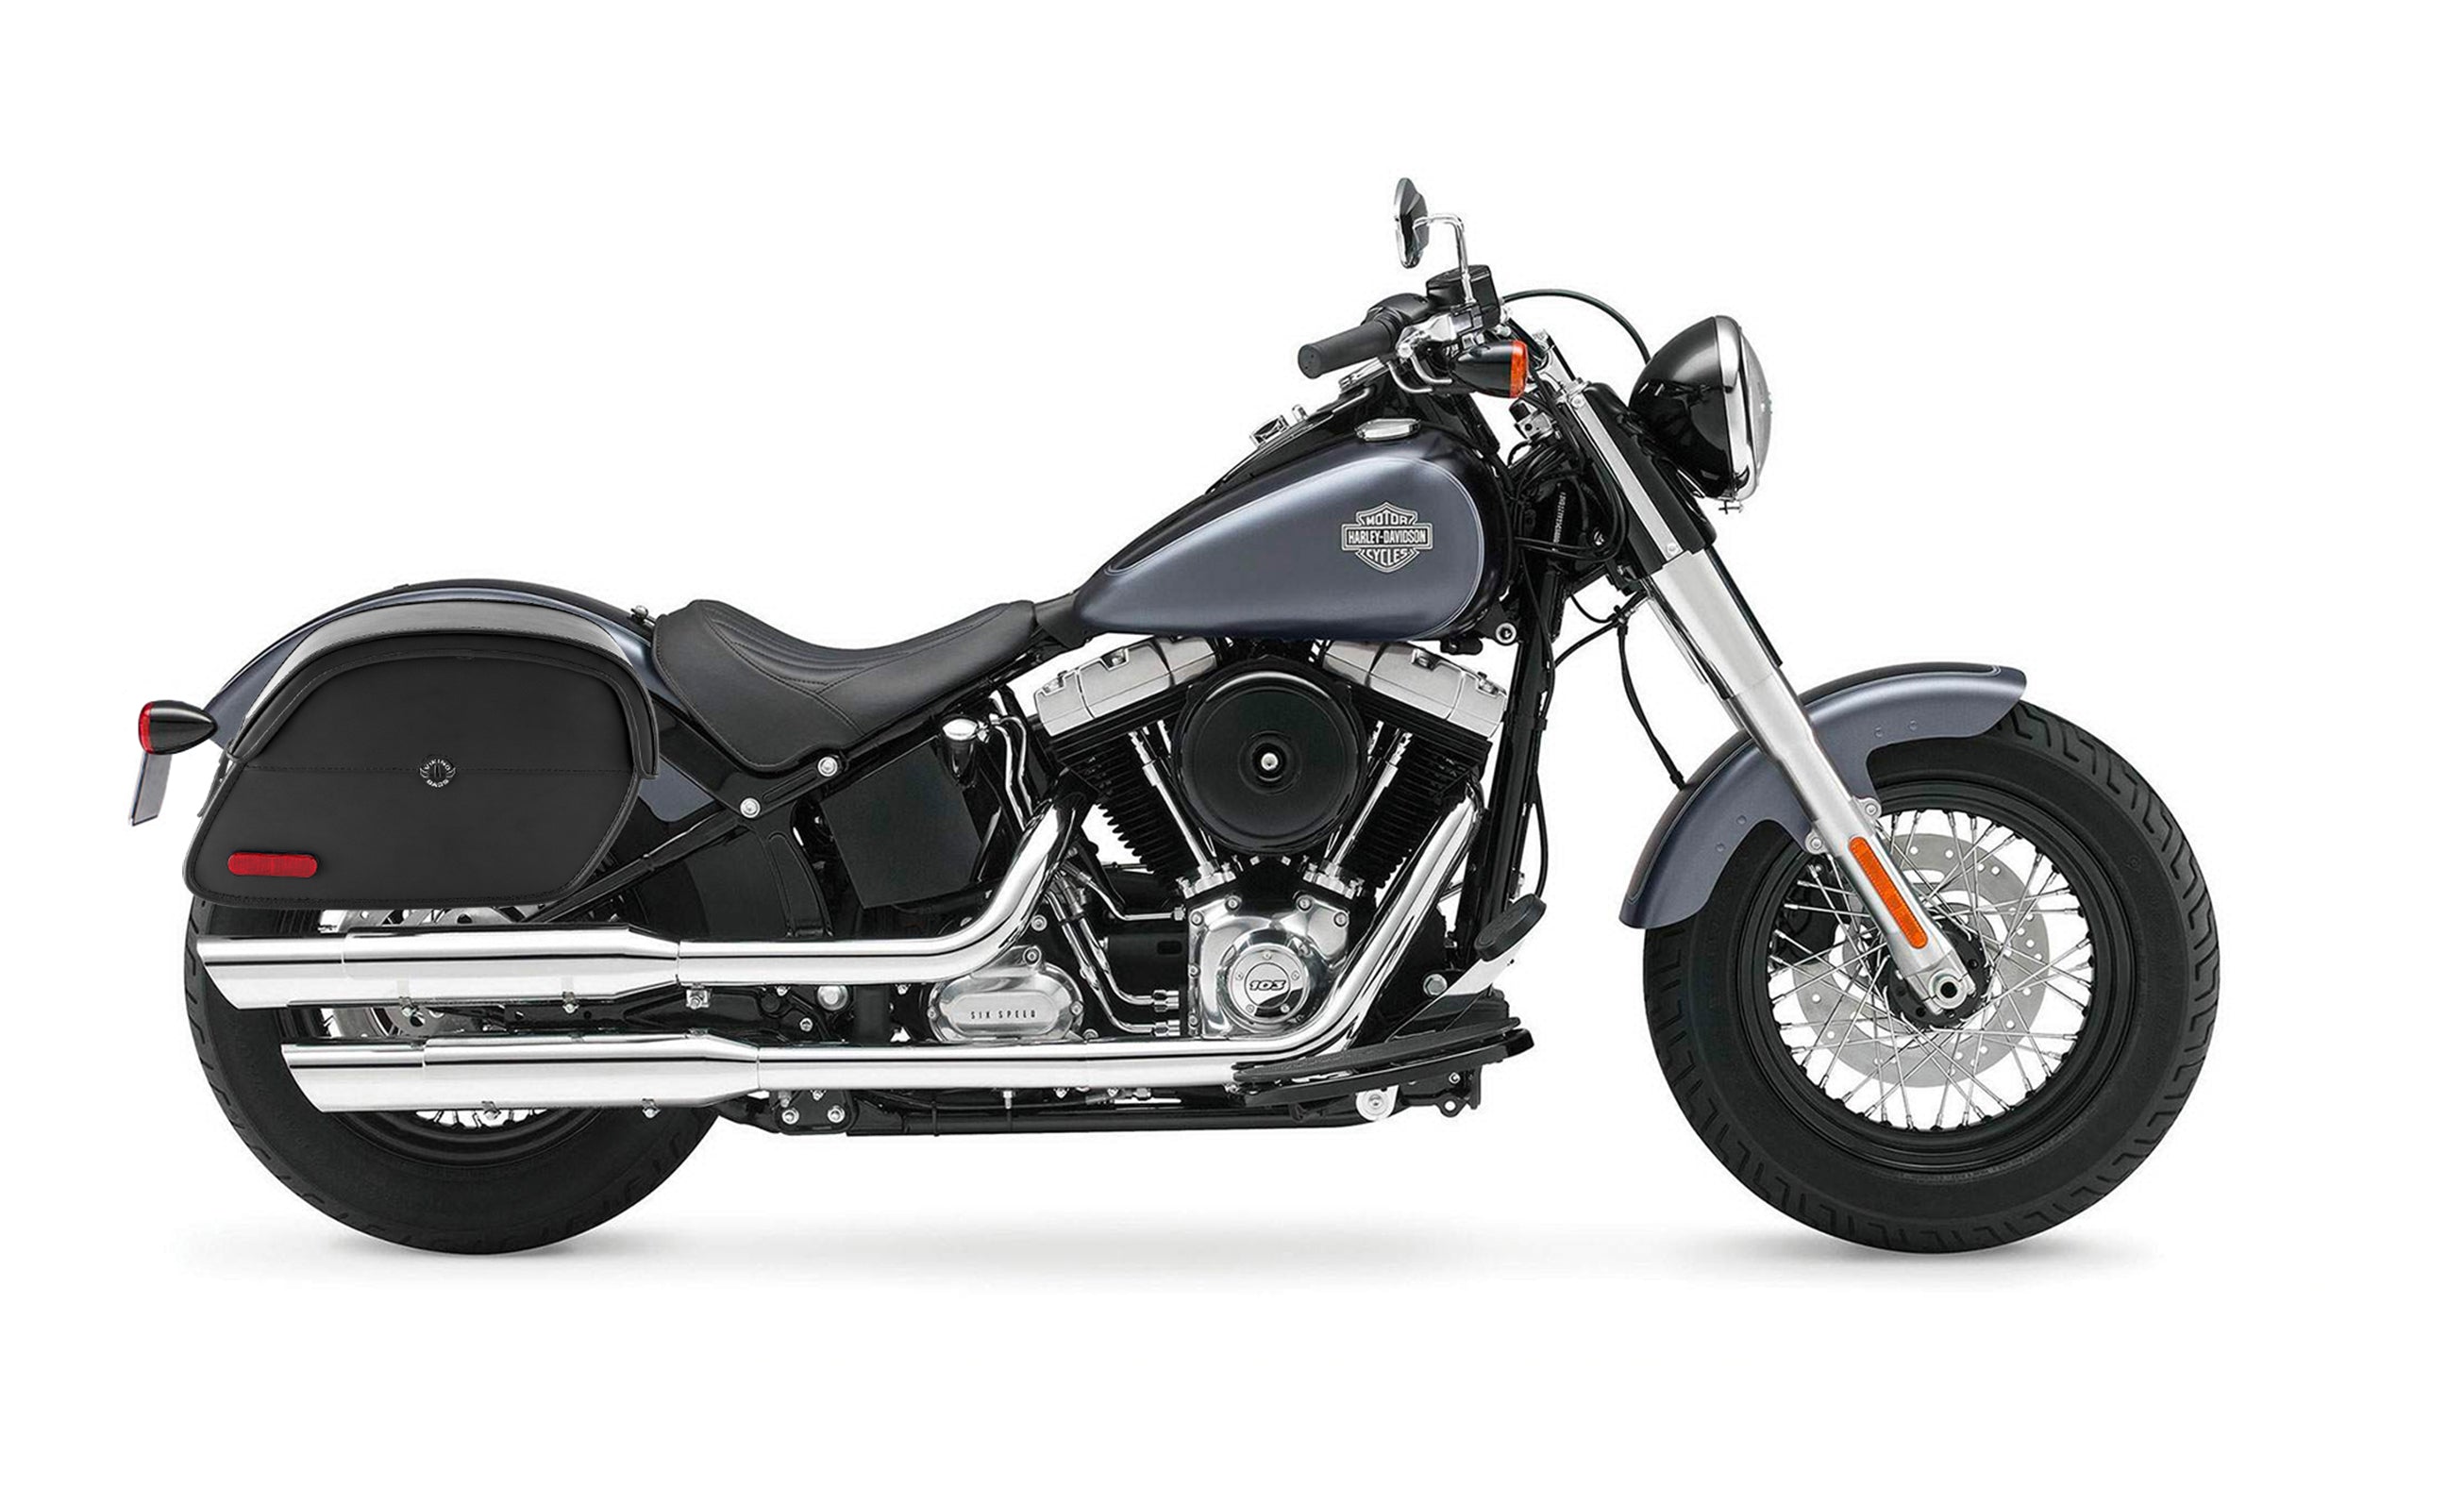 26L - California Large Leather Motorcycle Saddlebags for Harley Softail Slim FLS on Bike Photo @expand